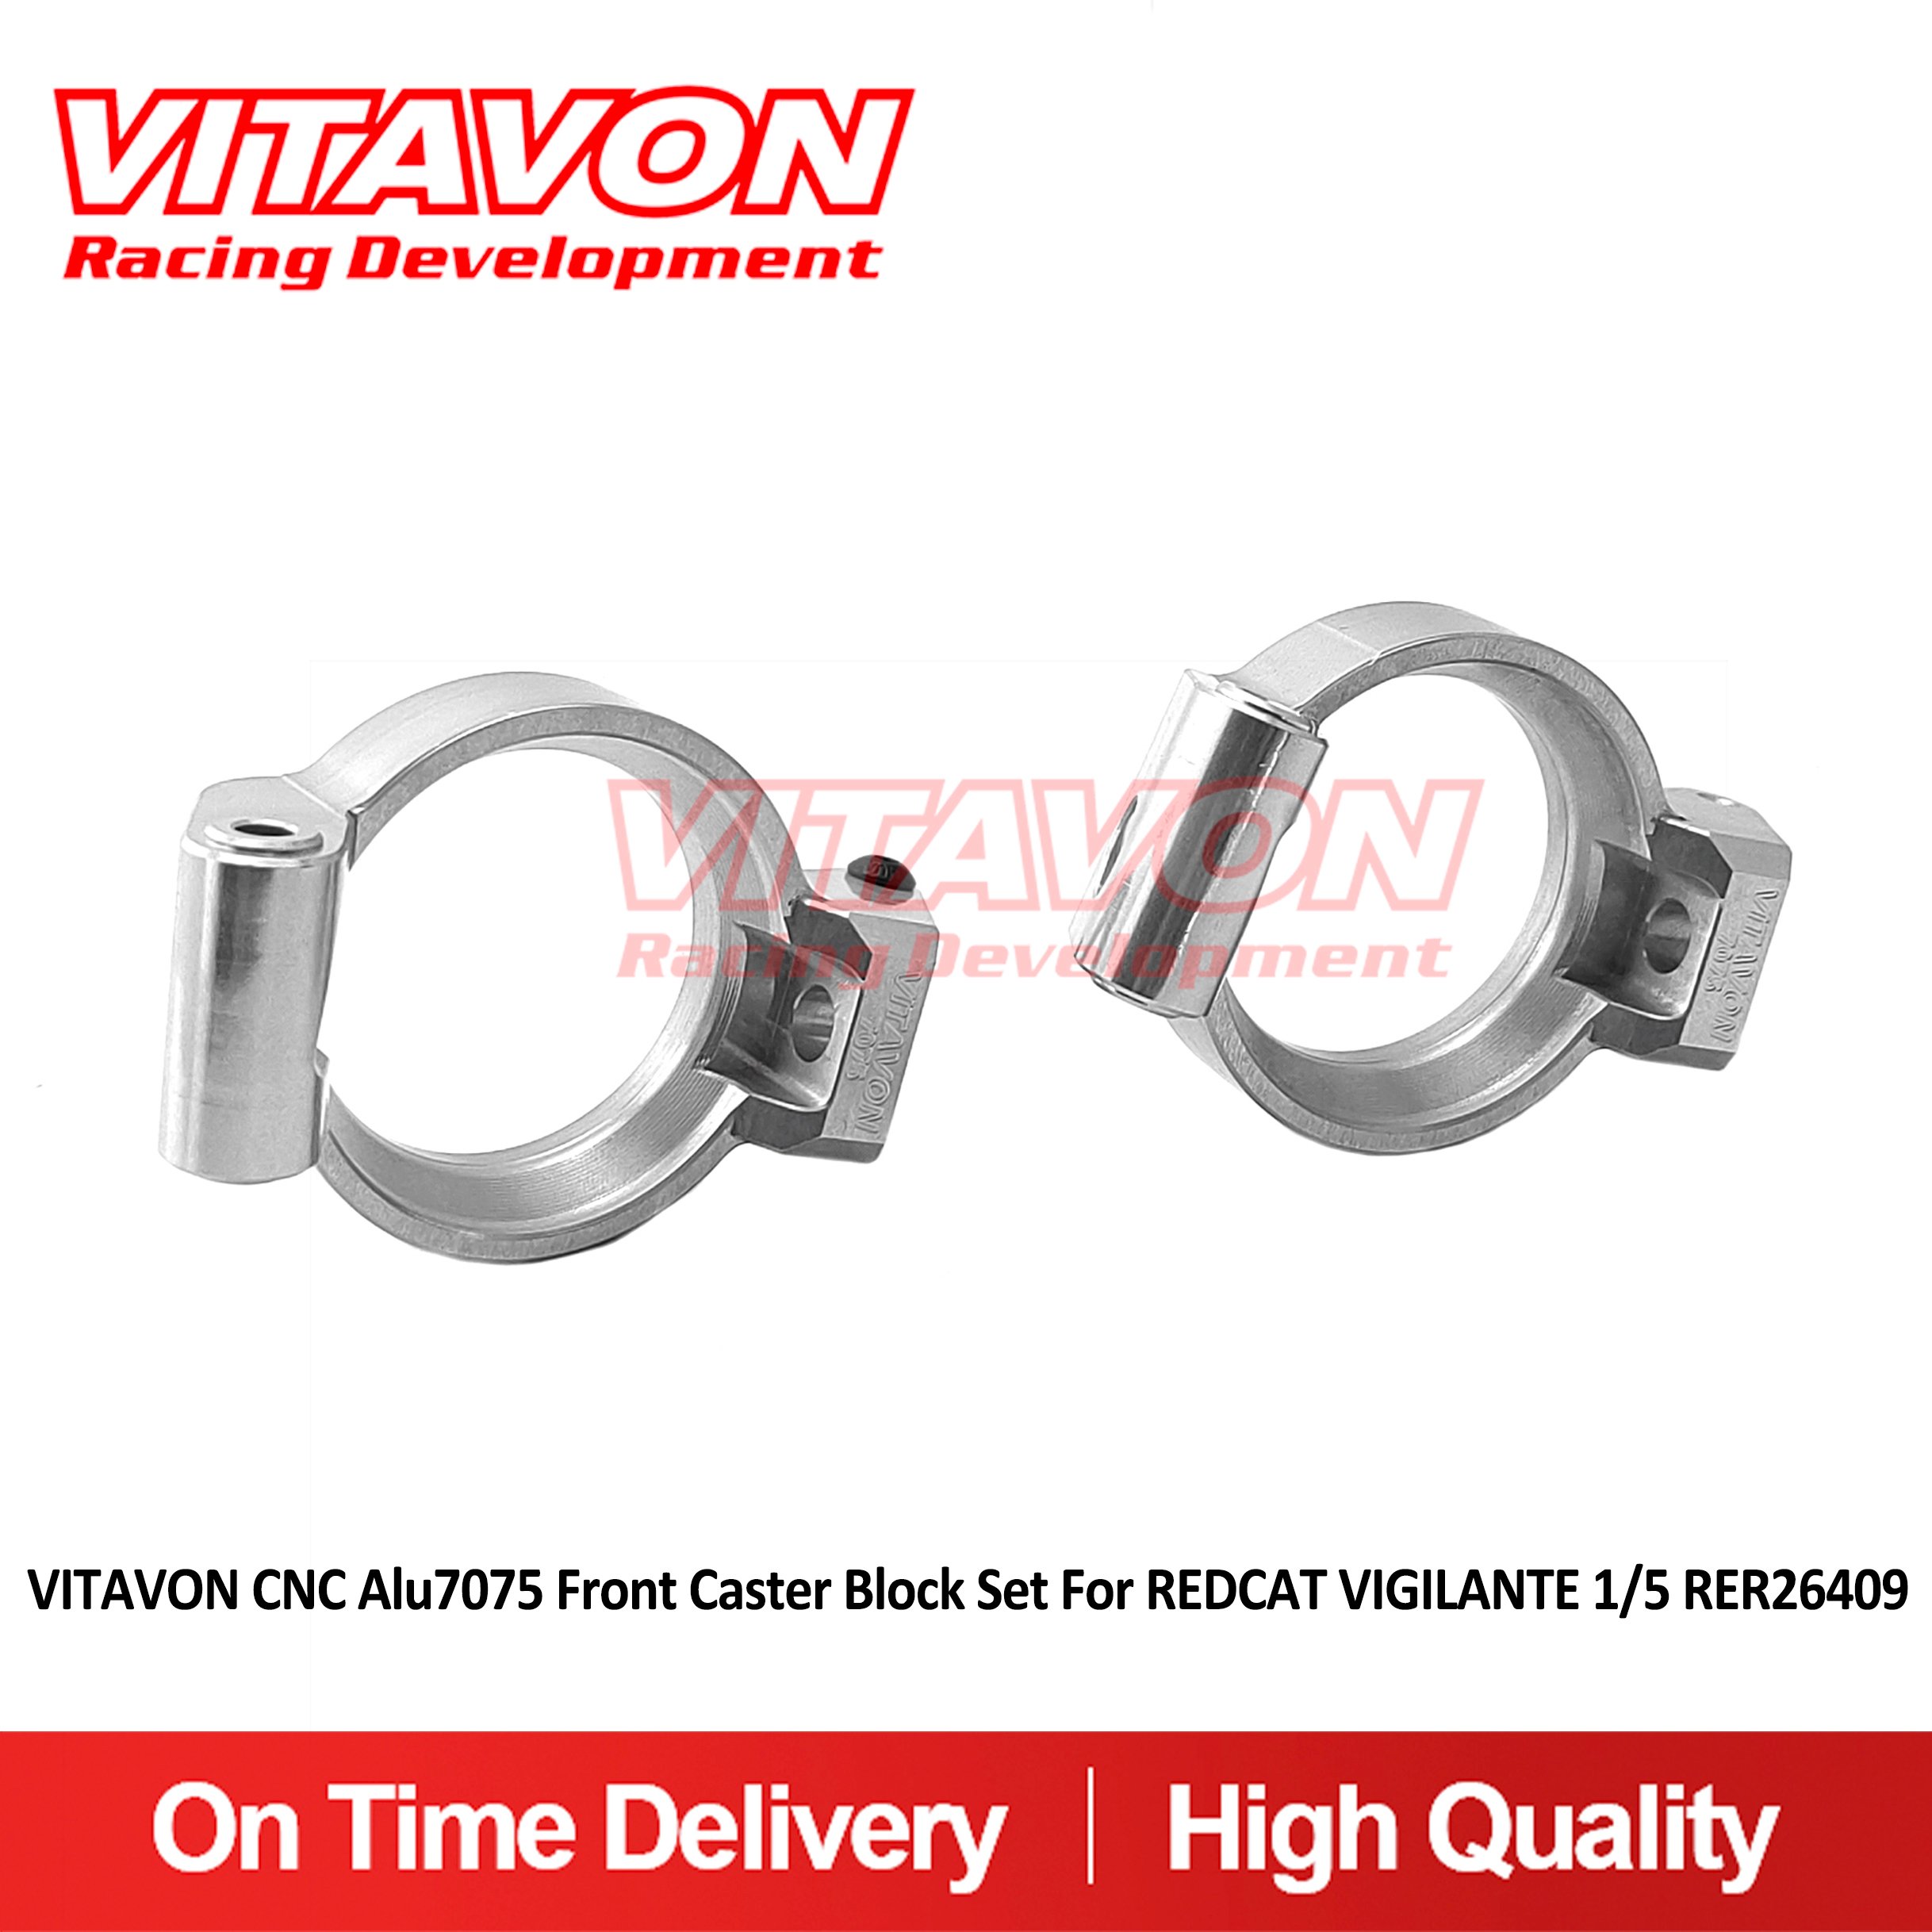 VITAVON CNC Alu7075 Front Caster Block Set For REDCAT VIGILANTE 1/5 RER26409